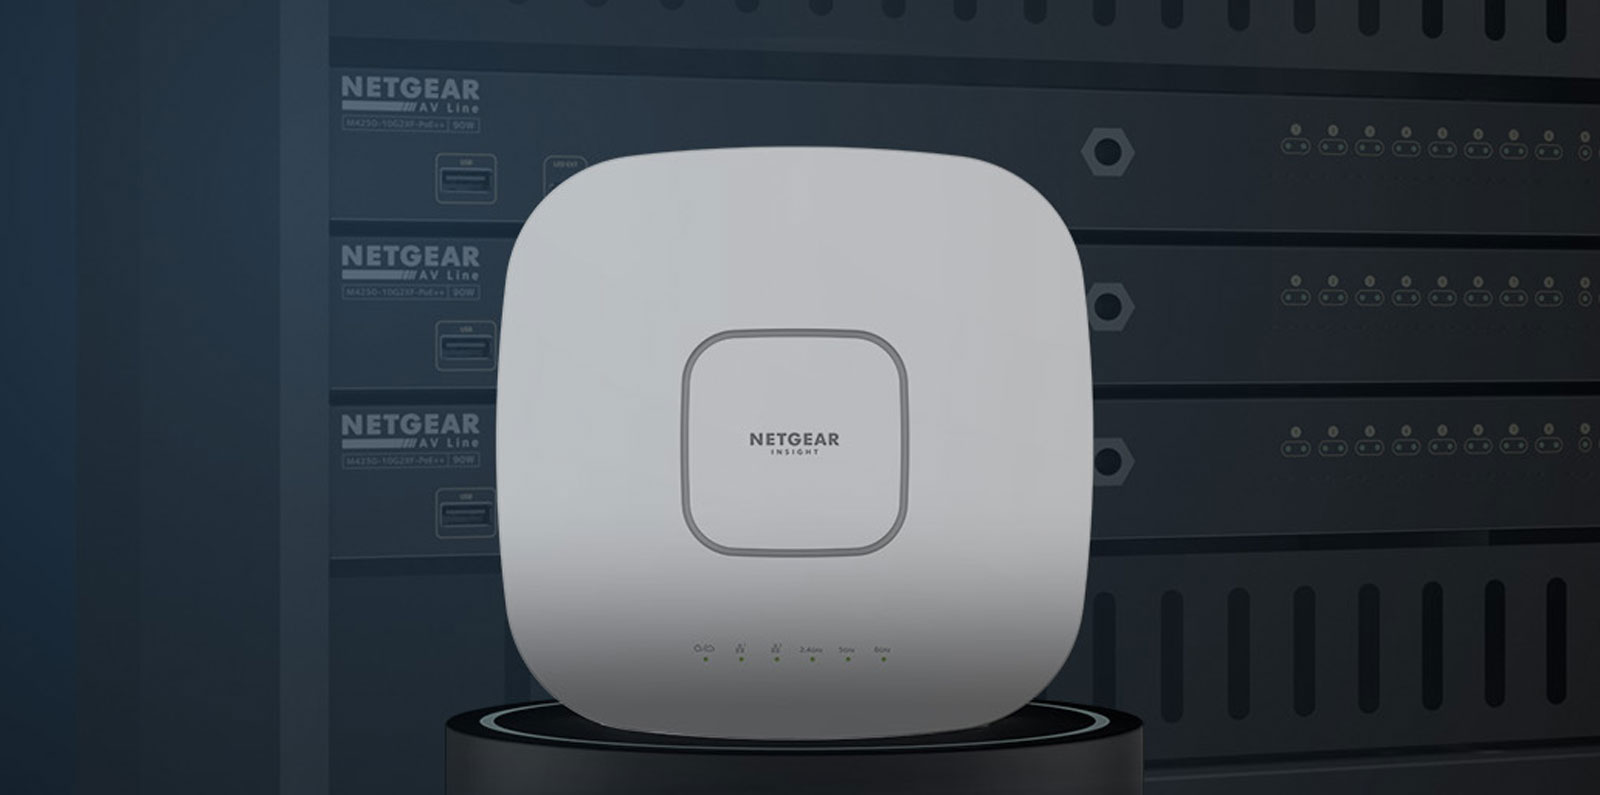 Netgear Commercial Wired and Wi-Fi Networks - Performance AV - Marietta and Atlanta, GA